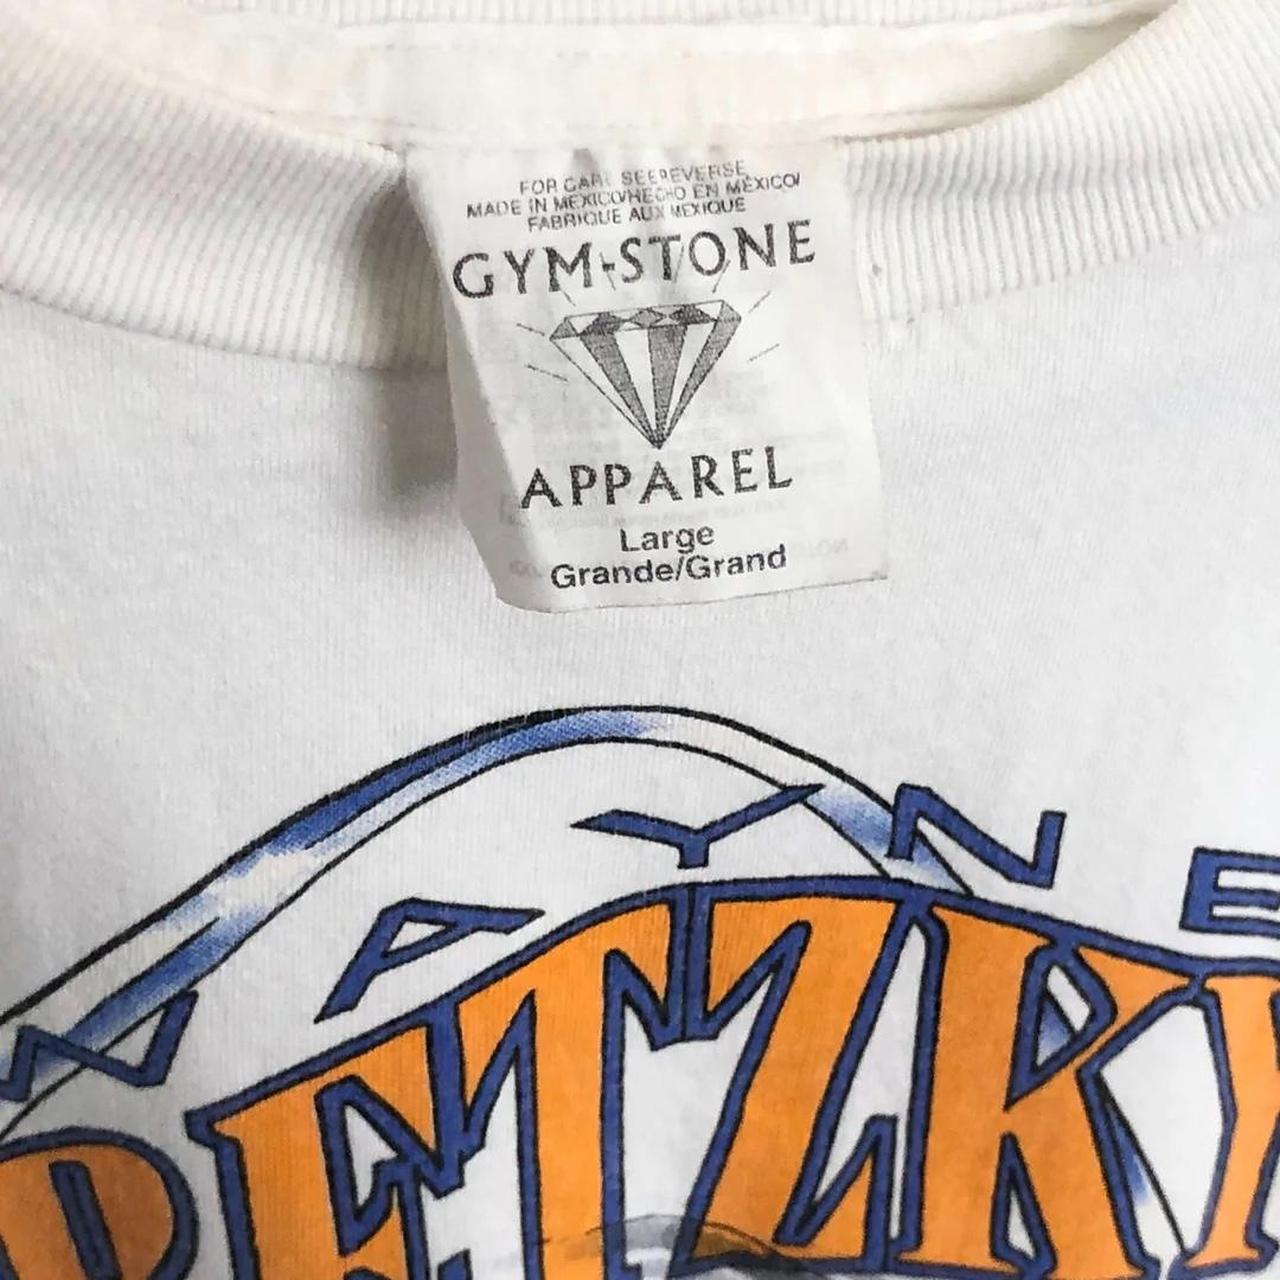 Vintage St Louis Blues Hockey T Shirt 90s Size: XL - Depop